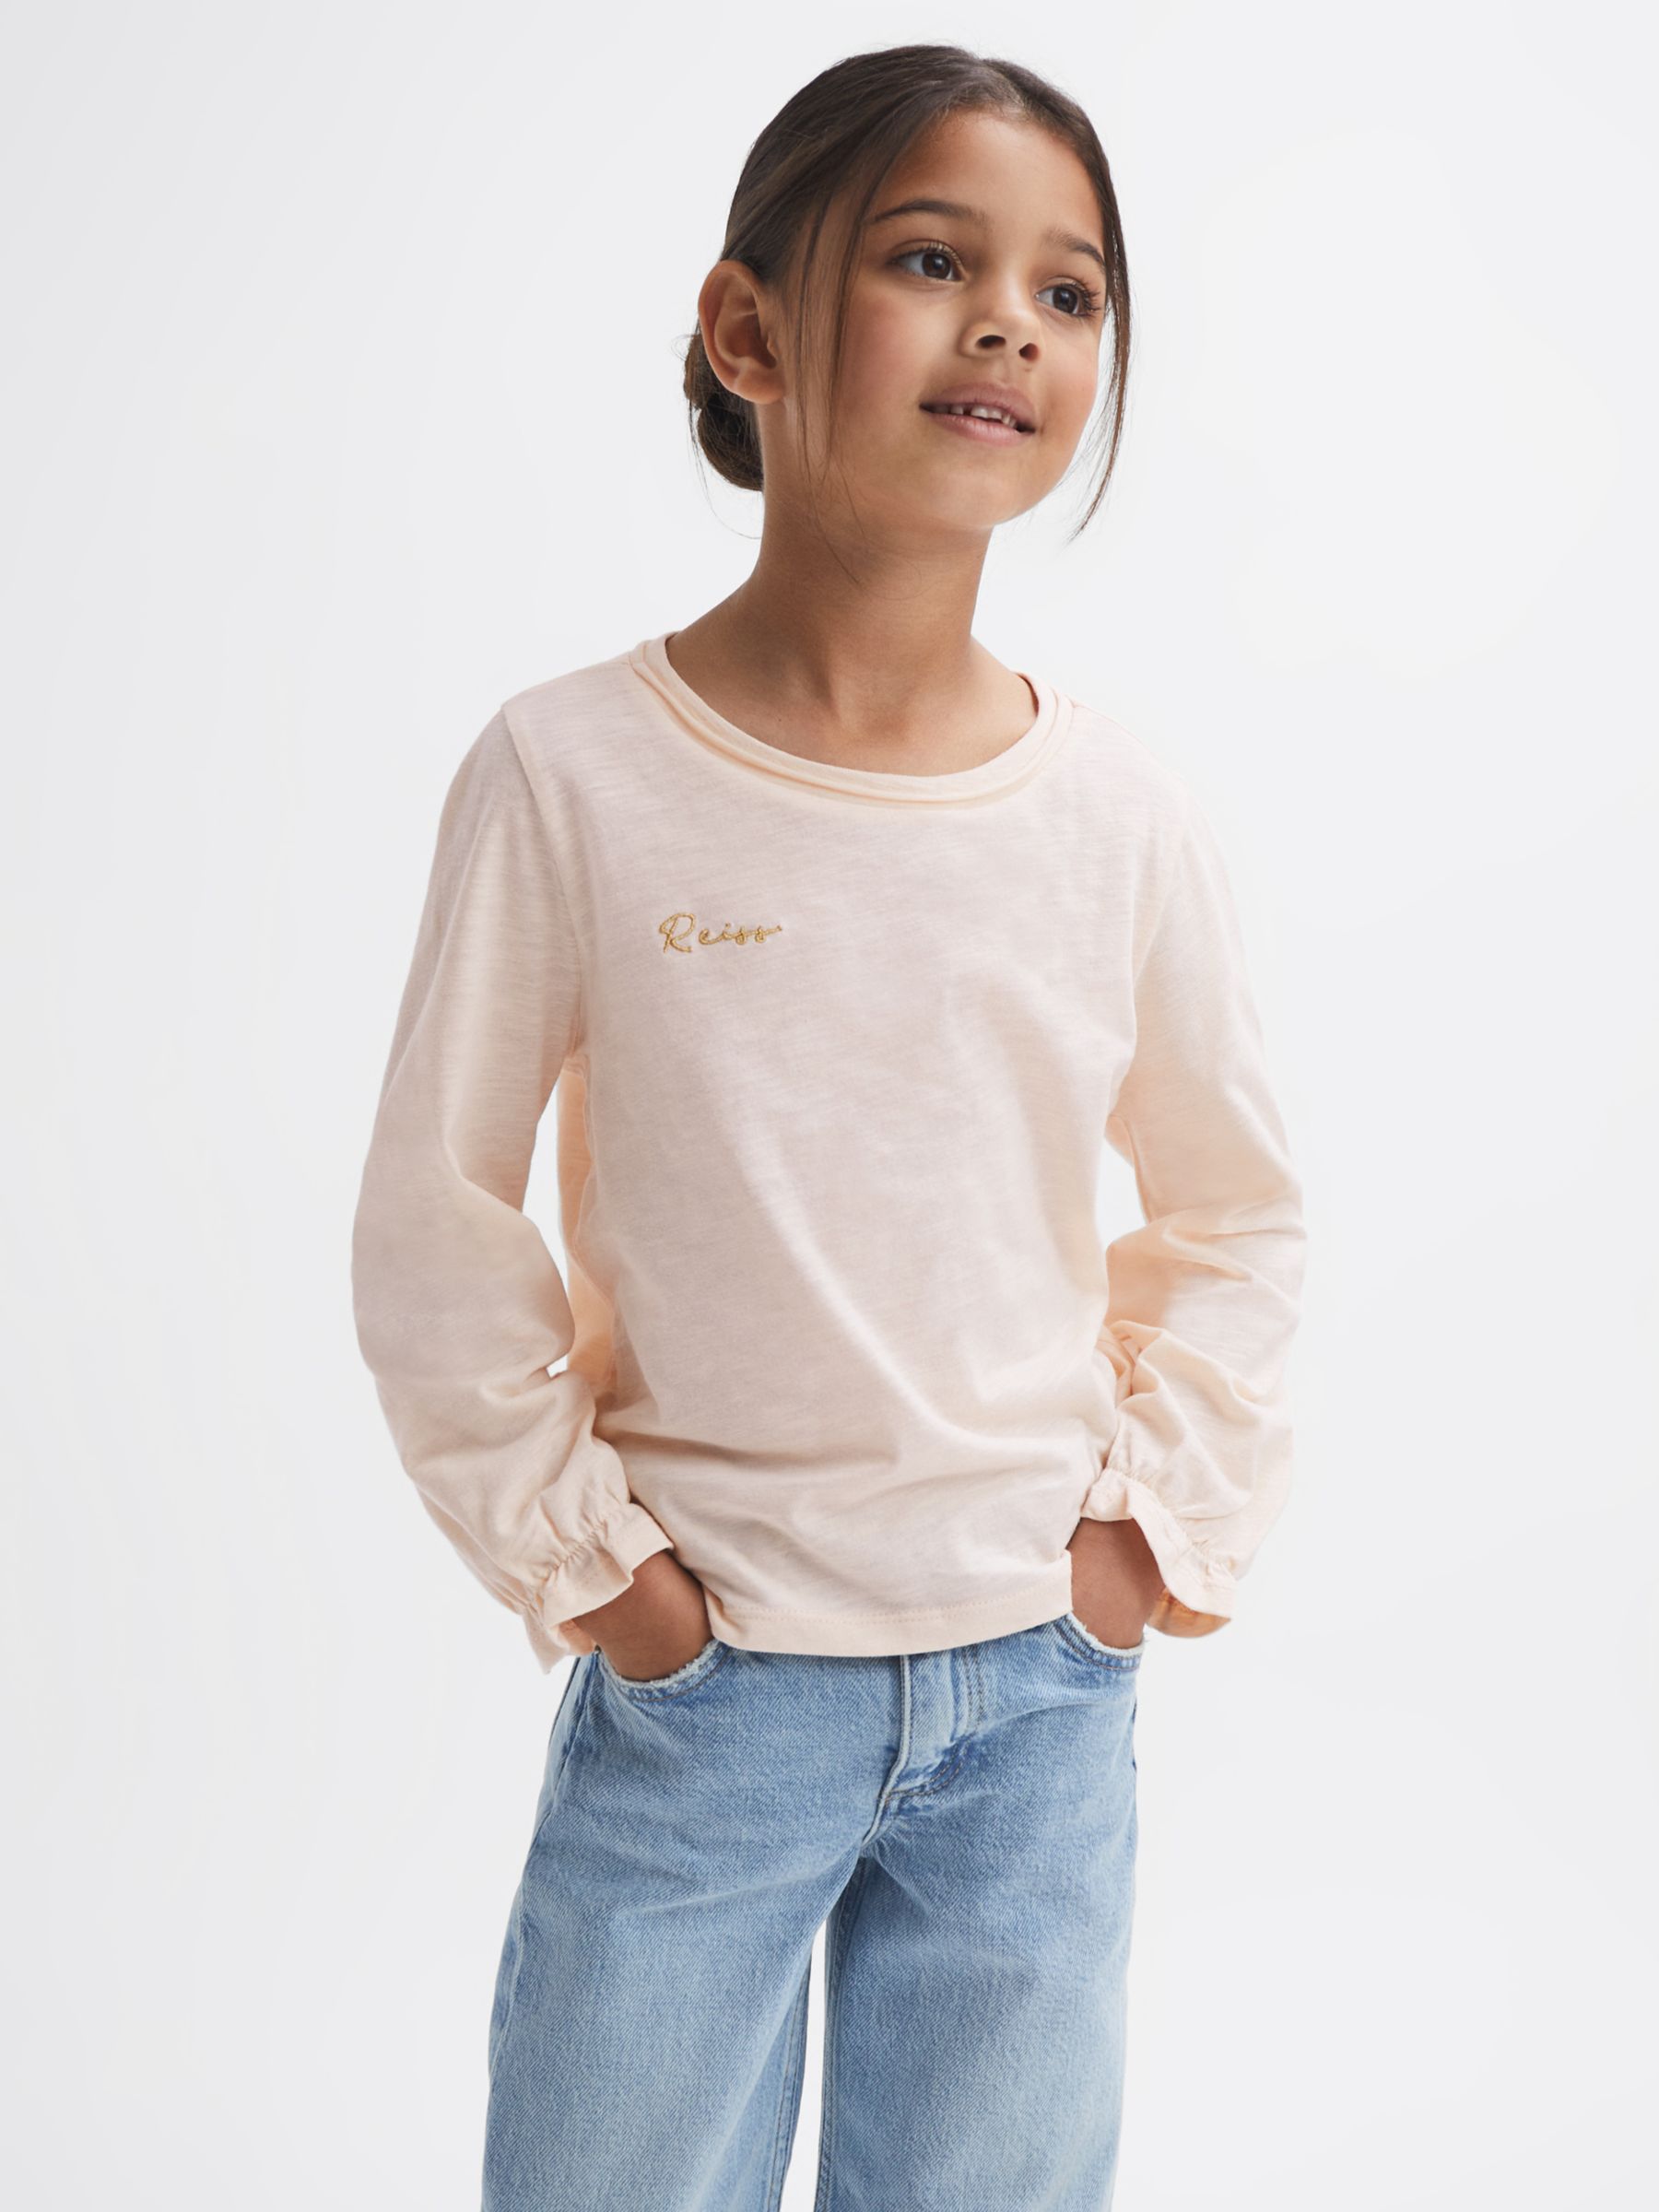 Reiss Kids' Rain Logo Long Sleeve T-Shirt, Ivory at John Lewis & Partners